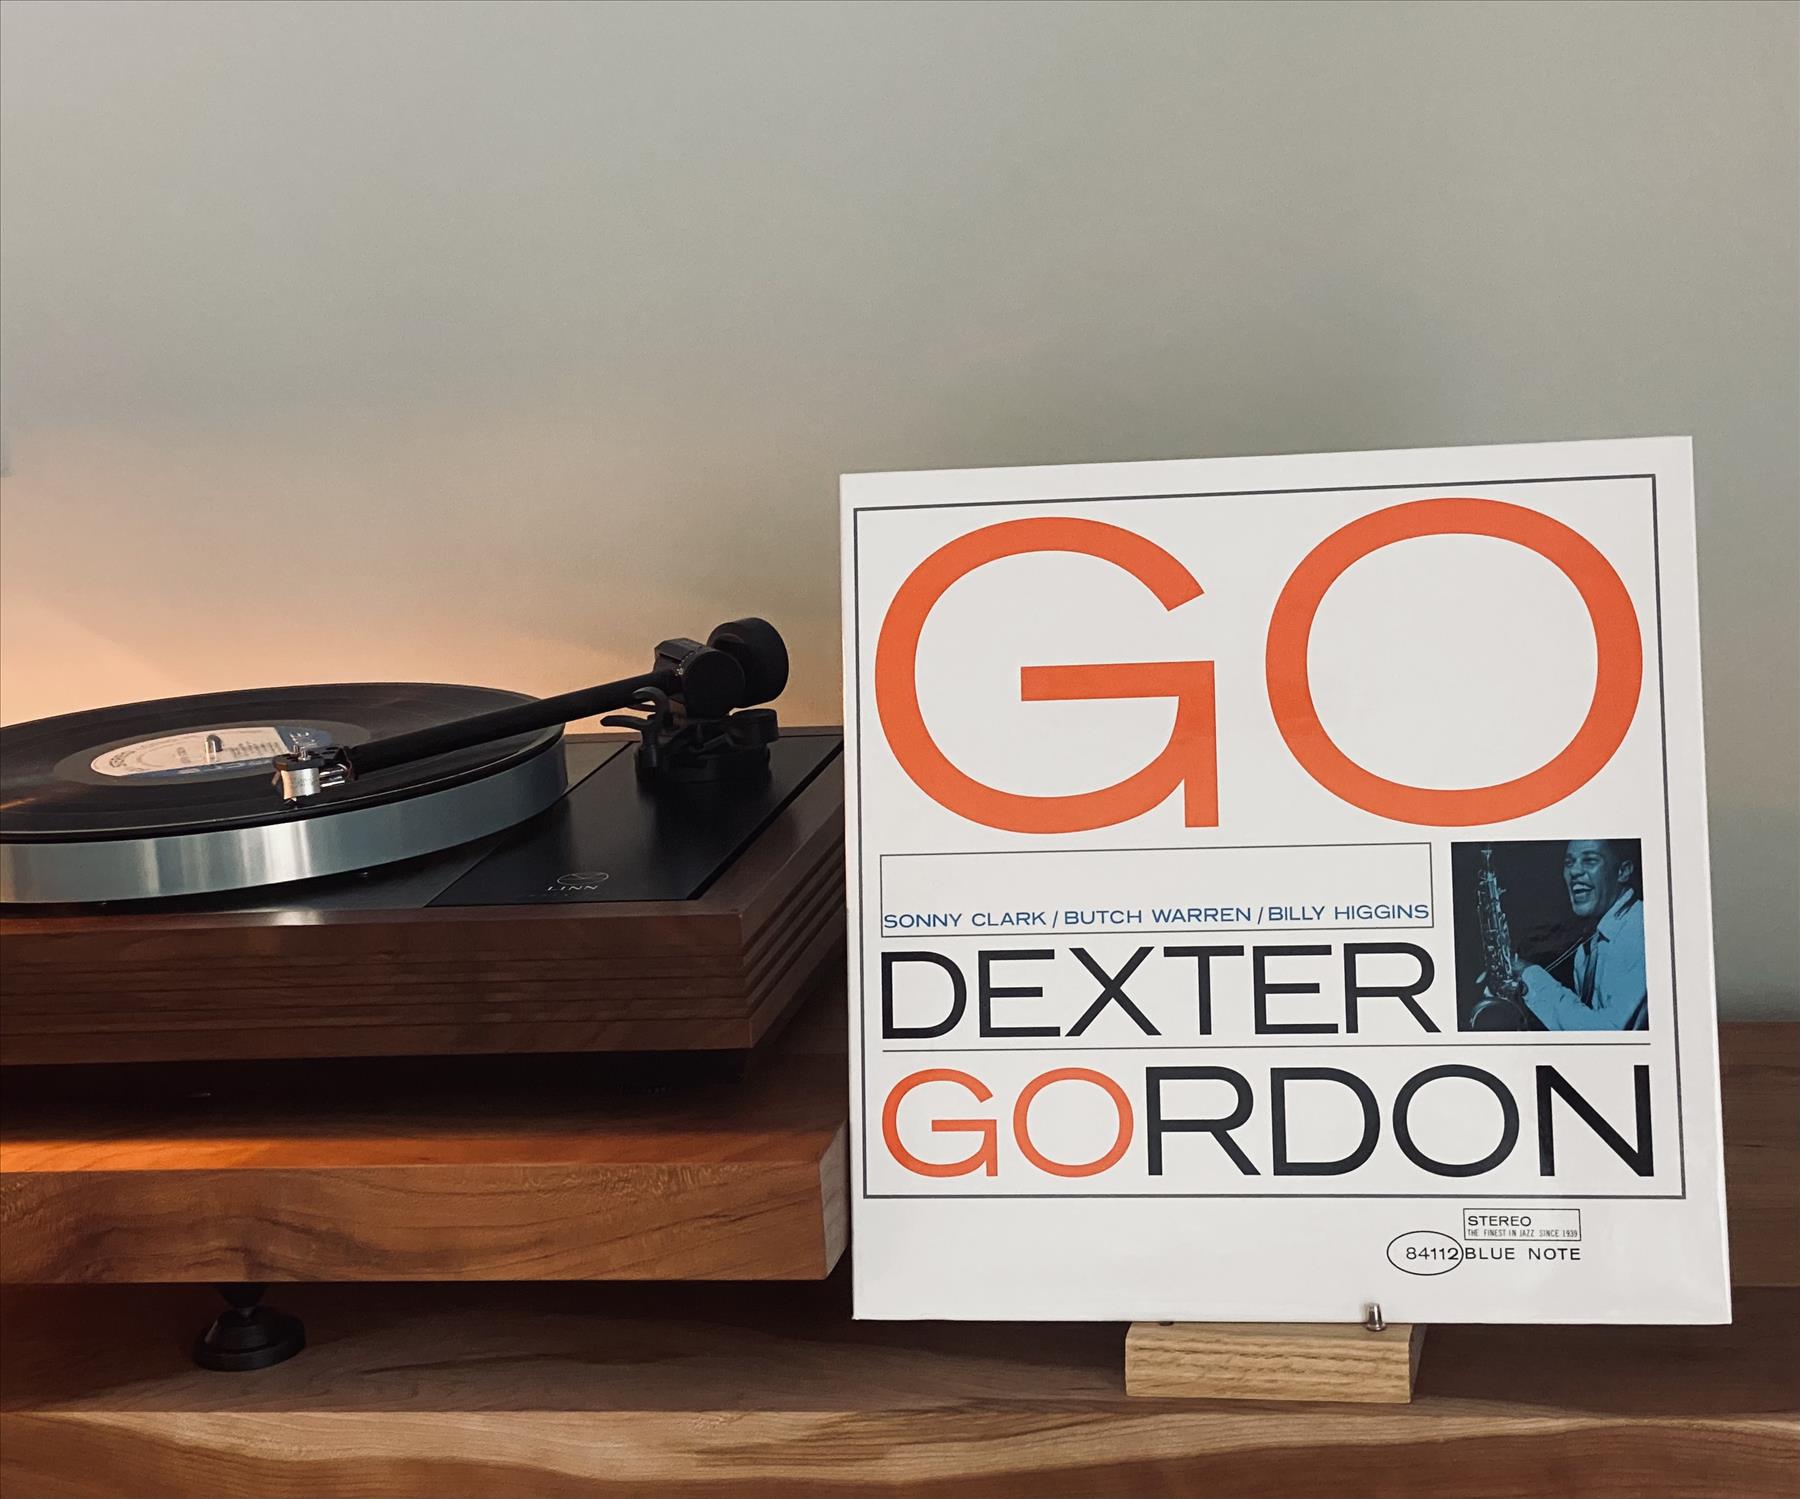 Dexter Gordons indispensable Jazz record GO! turns 59